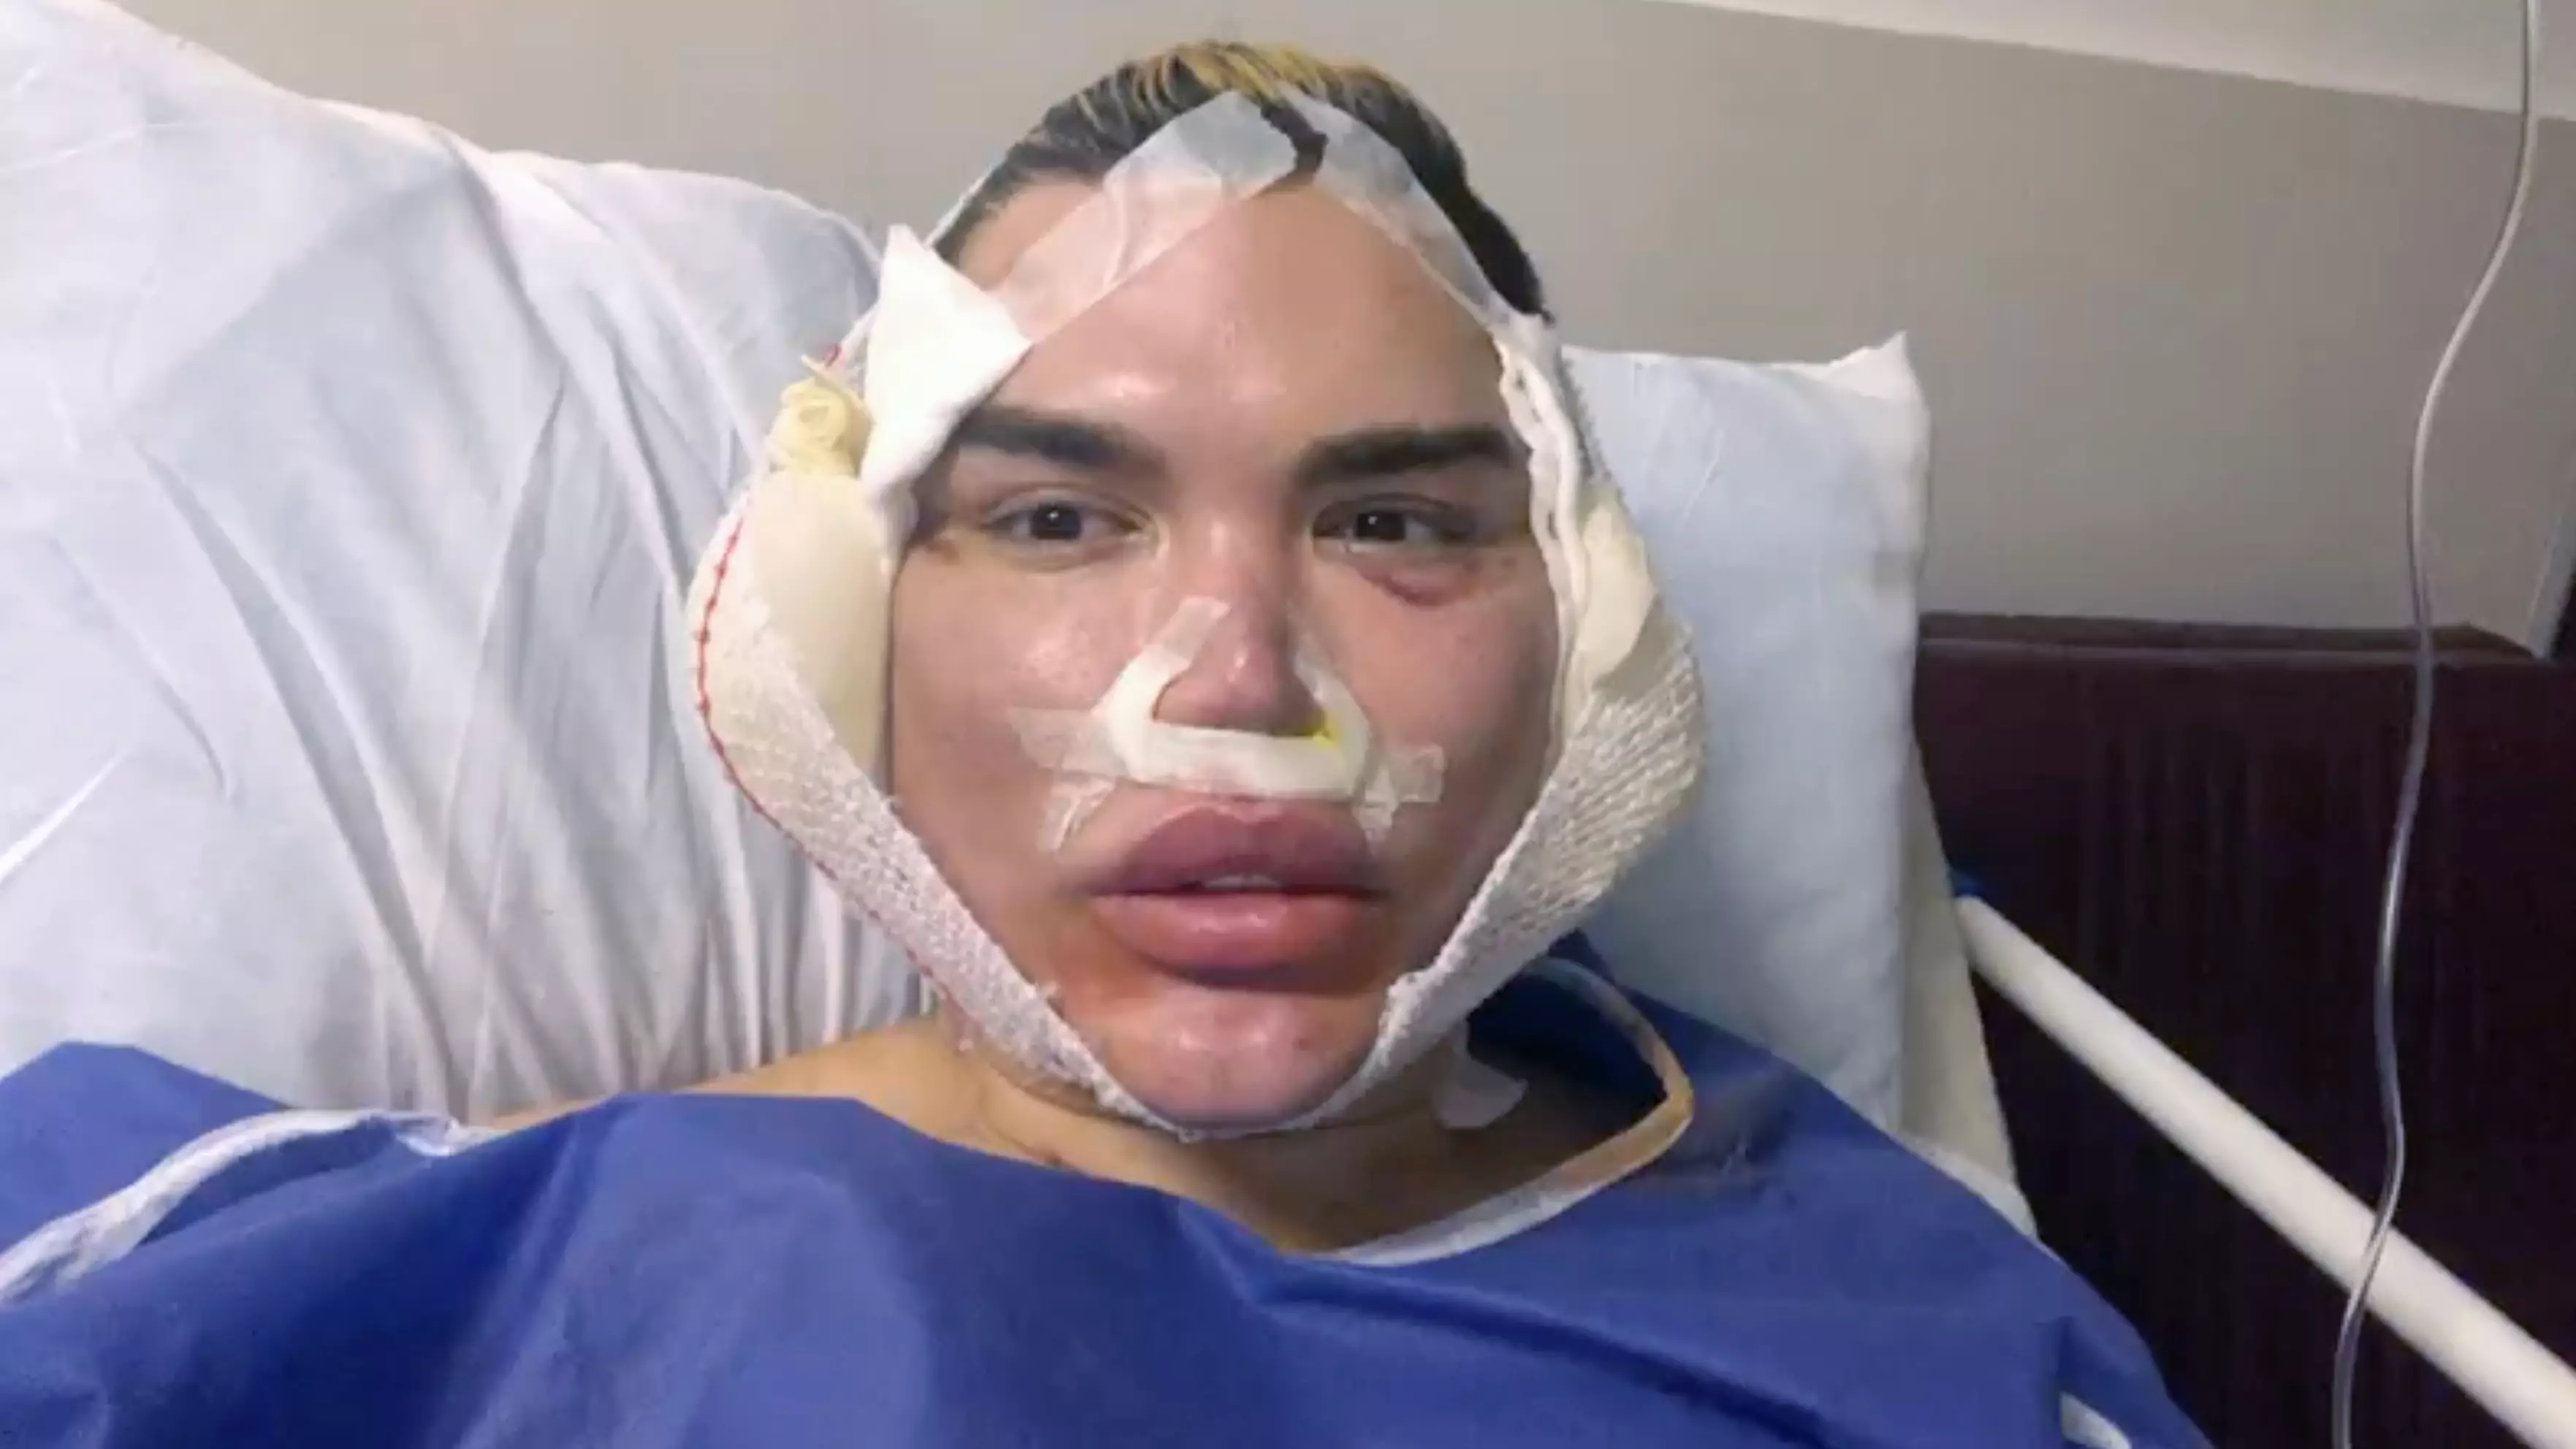 'Human Ken Doll' Rodrigo Alves Warns People About Facial Procedures After Revision Surgeries